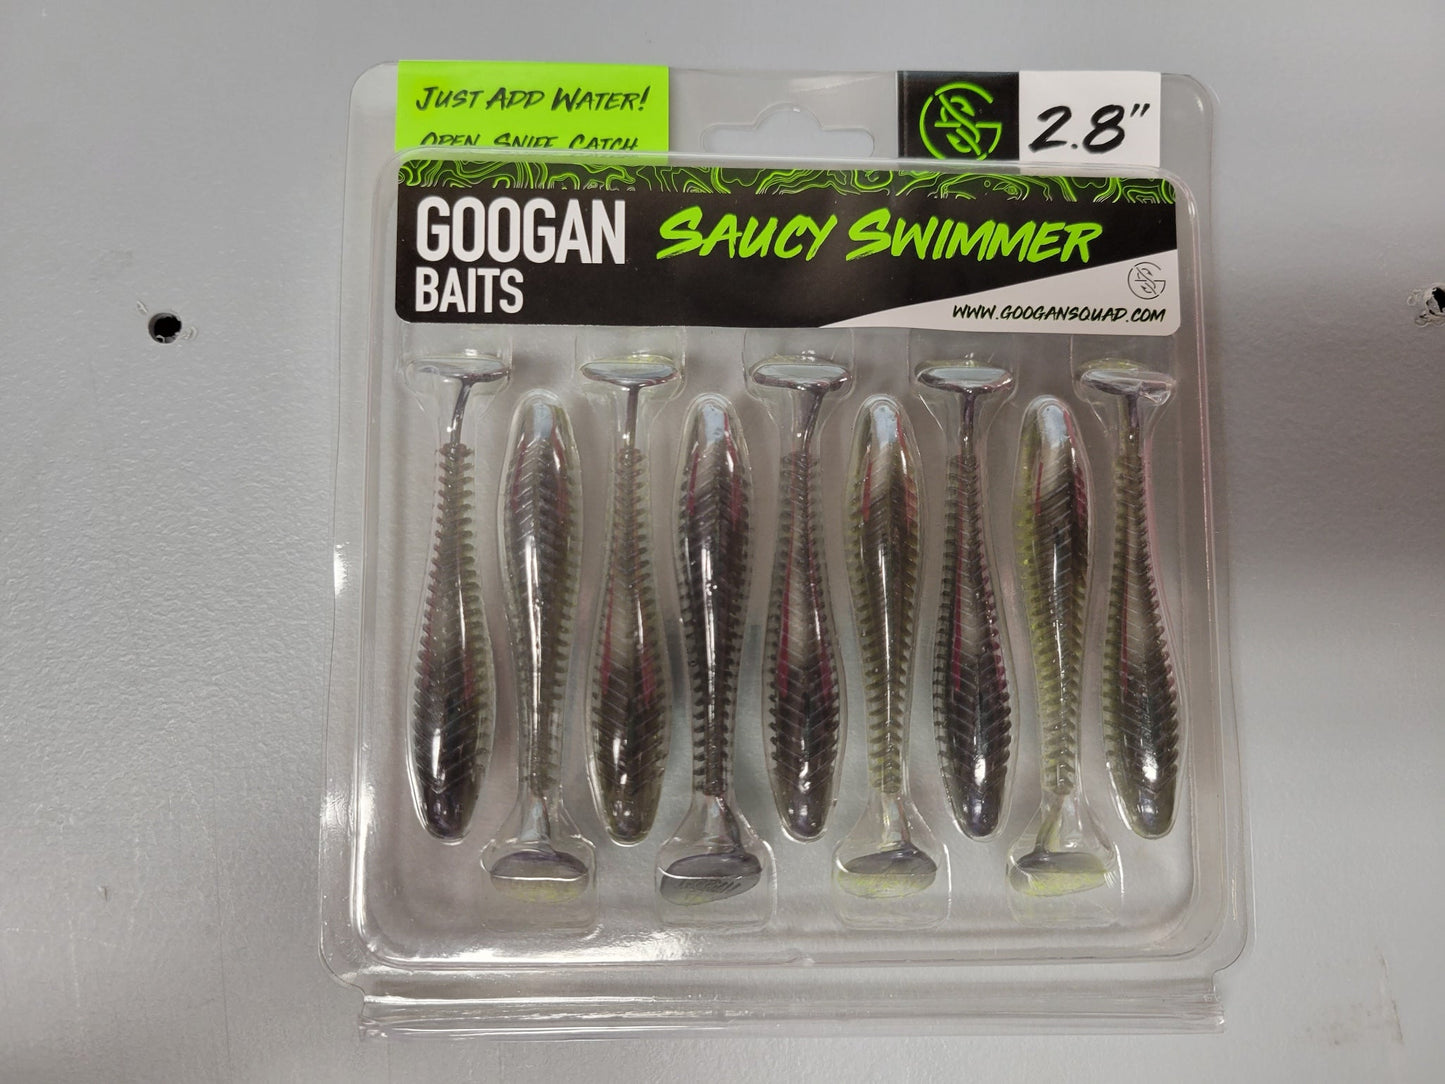 Googan 2.8" Saucy Swimmer Sexy Shimmer